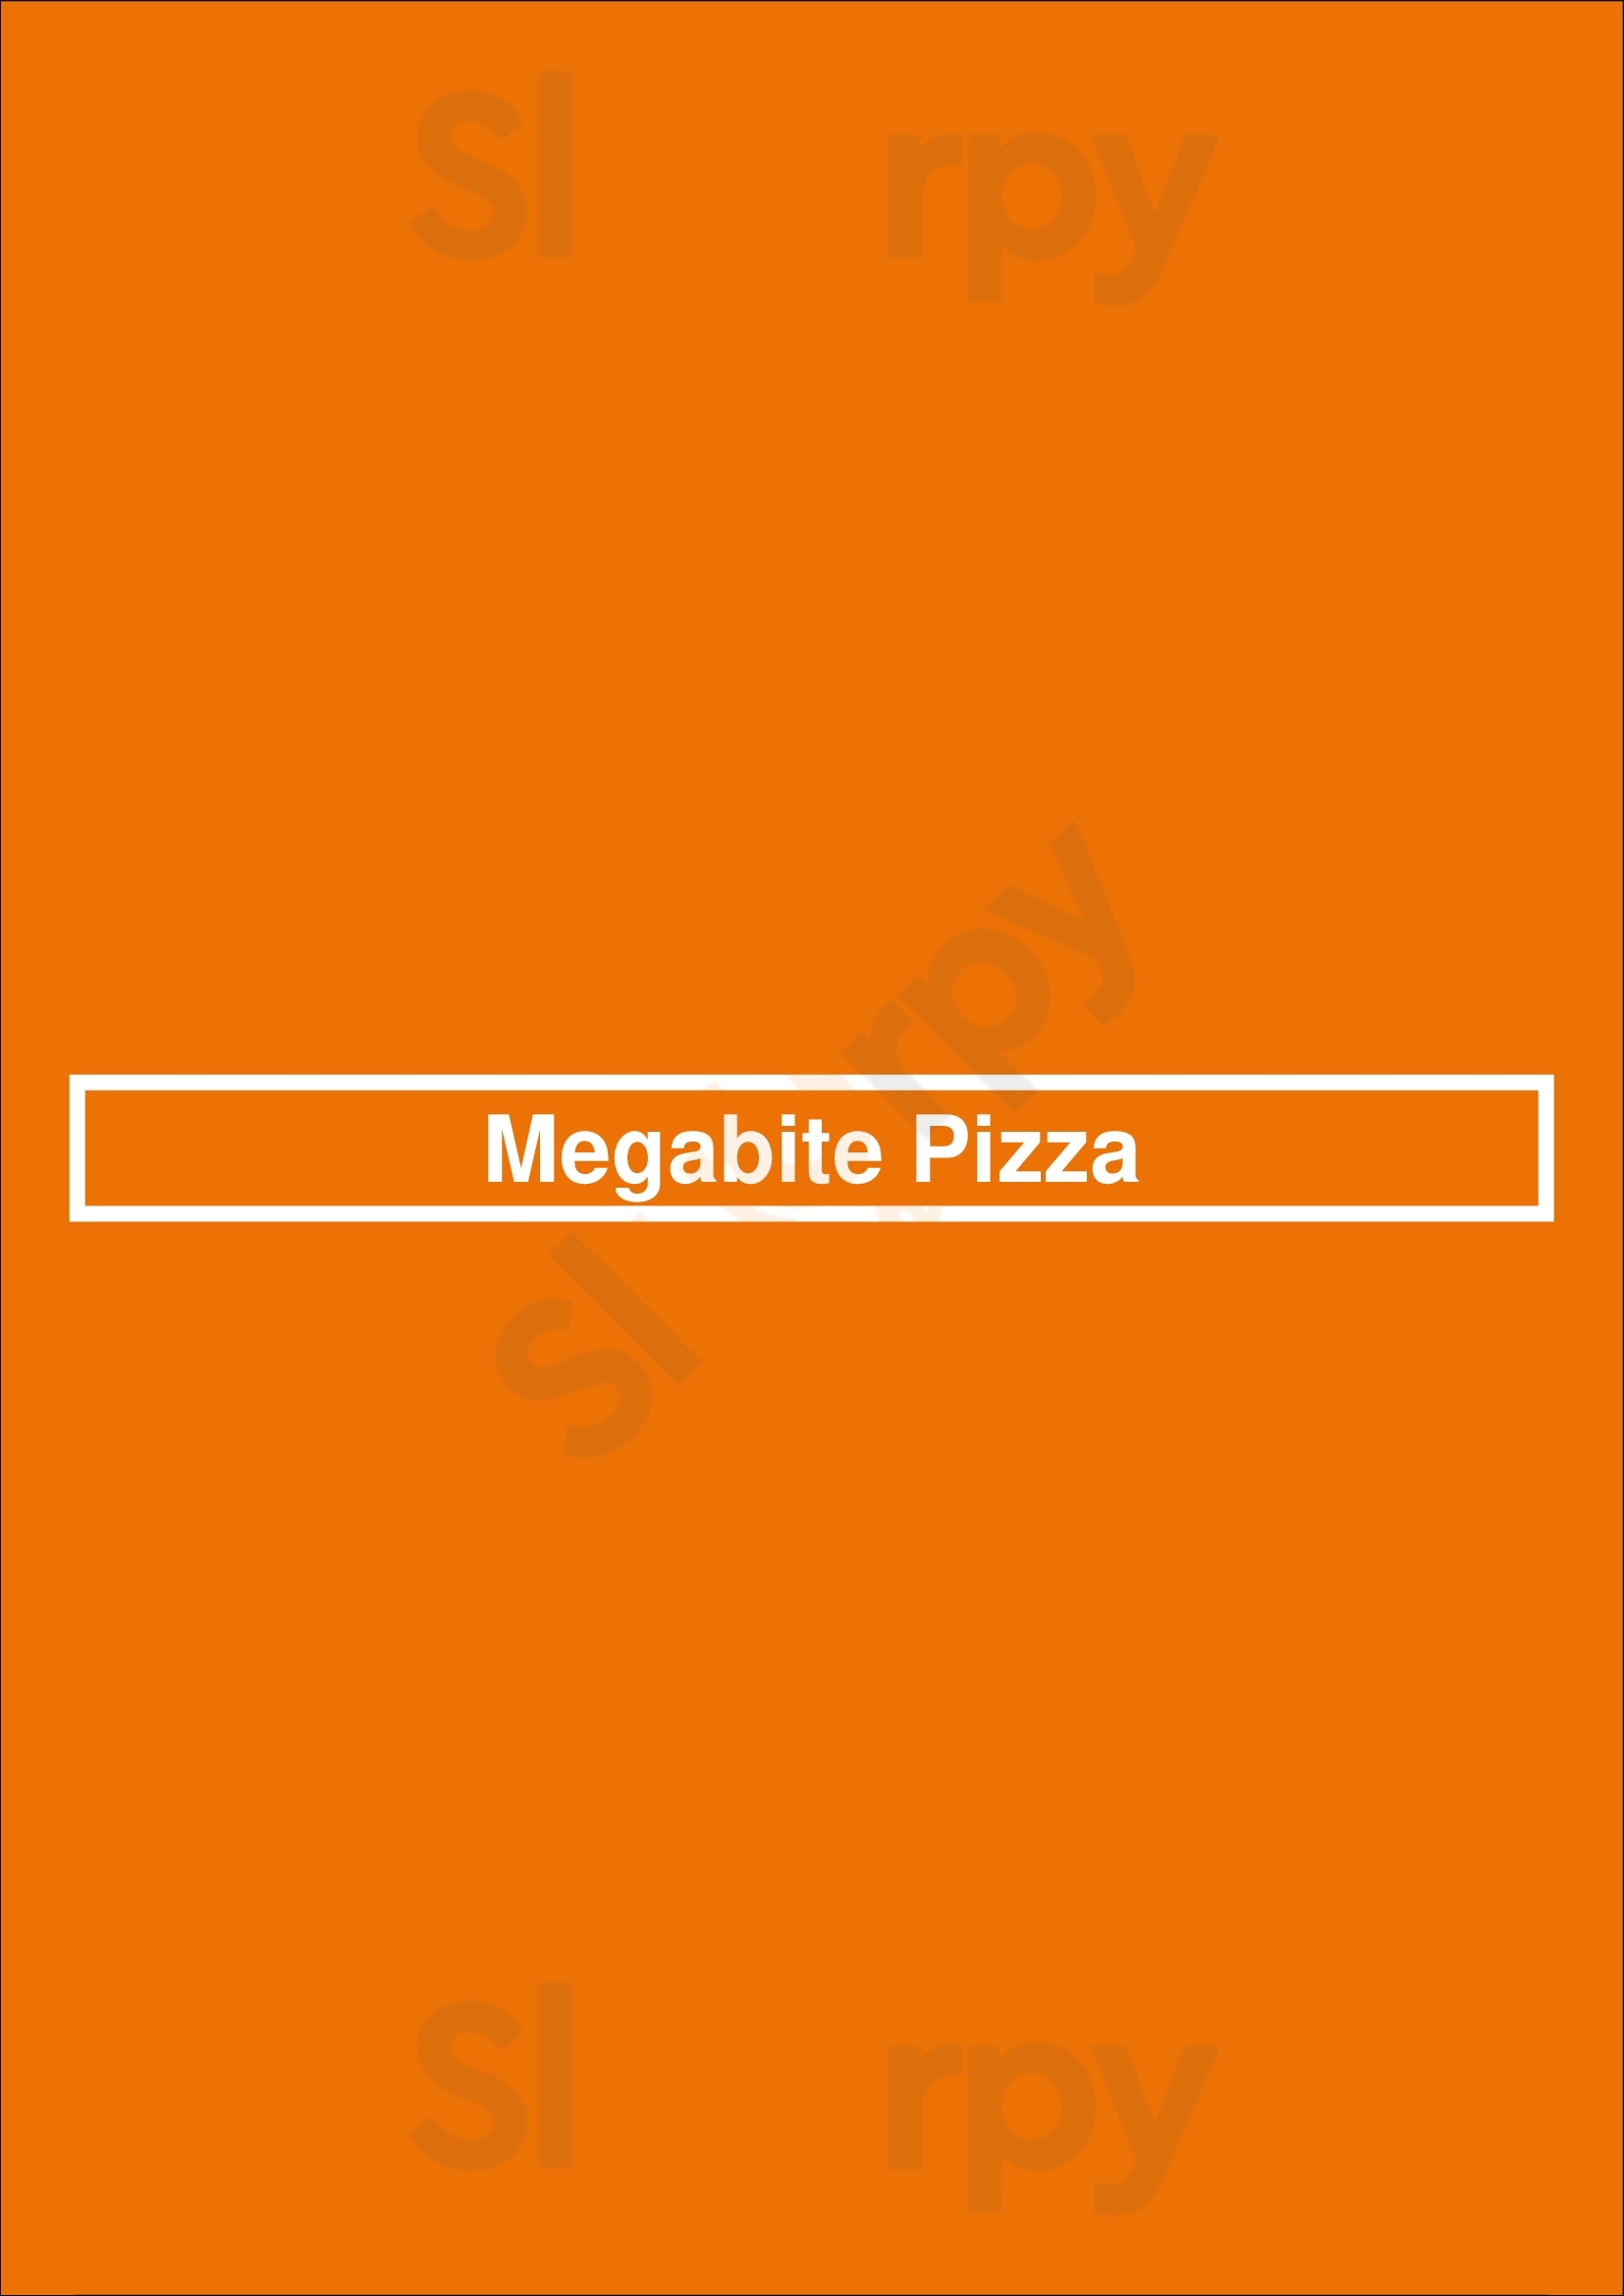 Megabite Pizza Vancouver Menu - 1